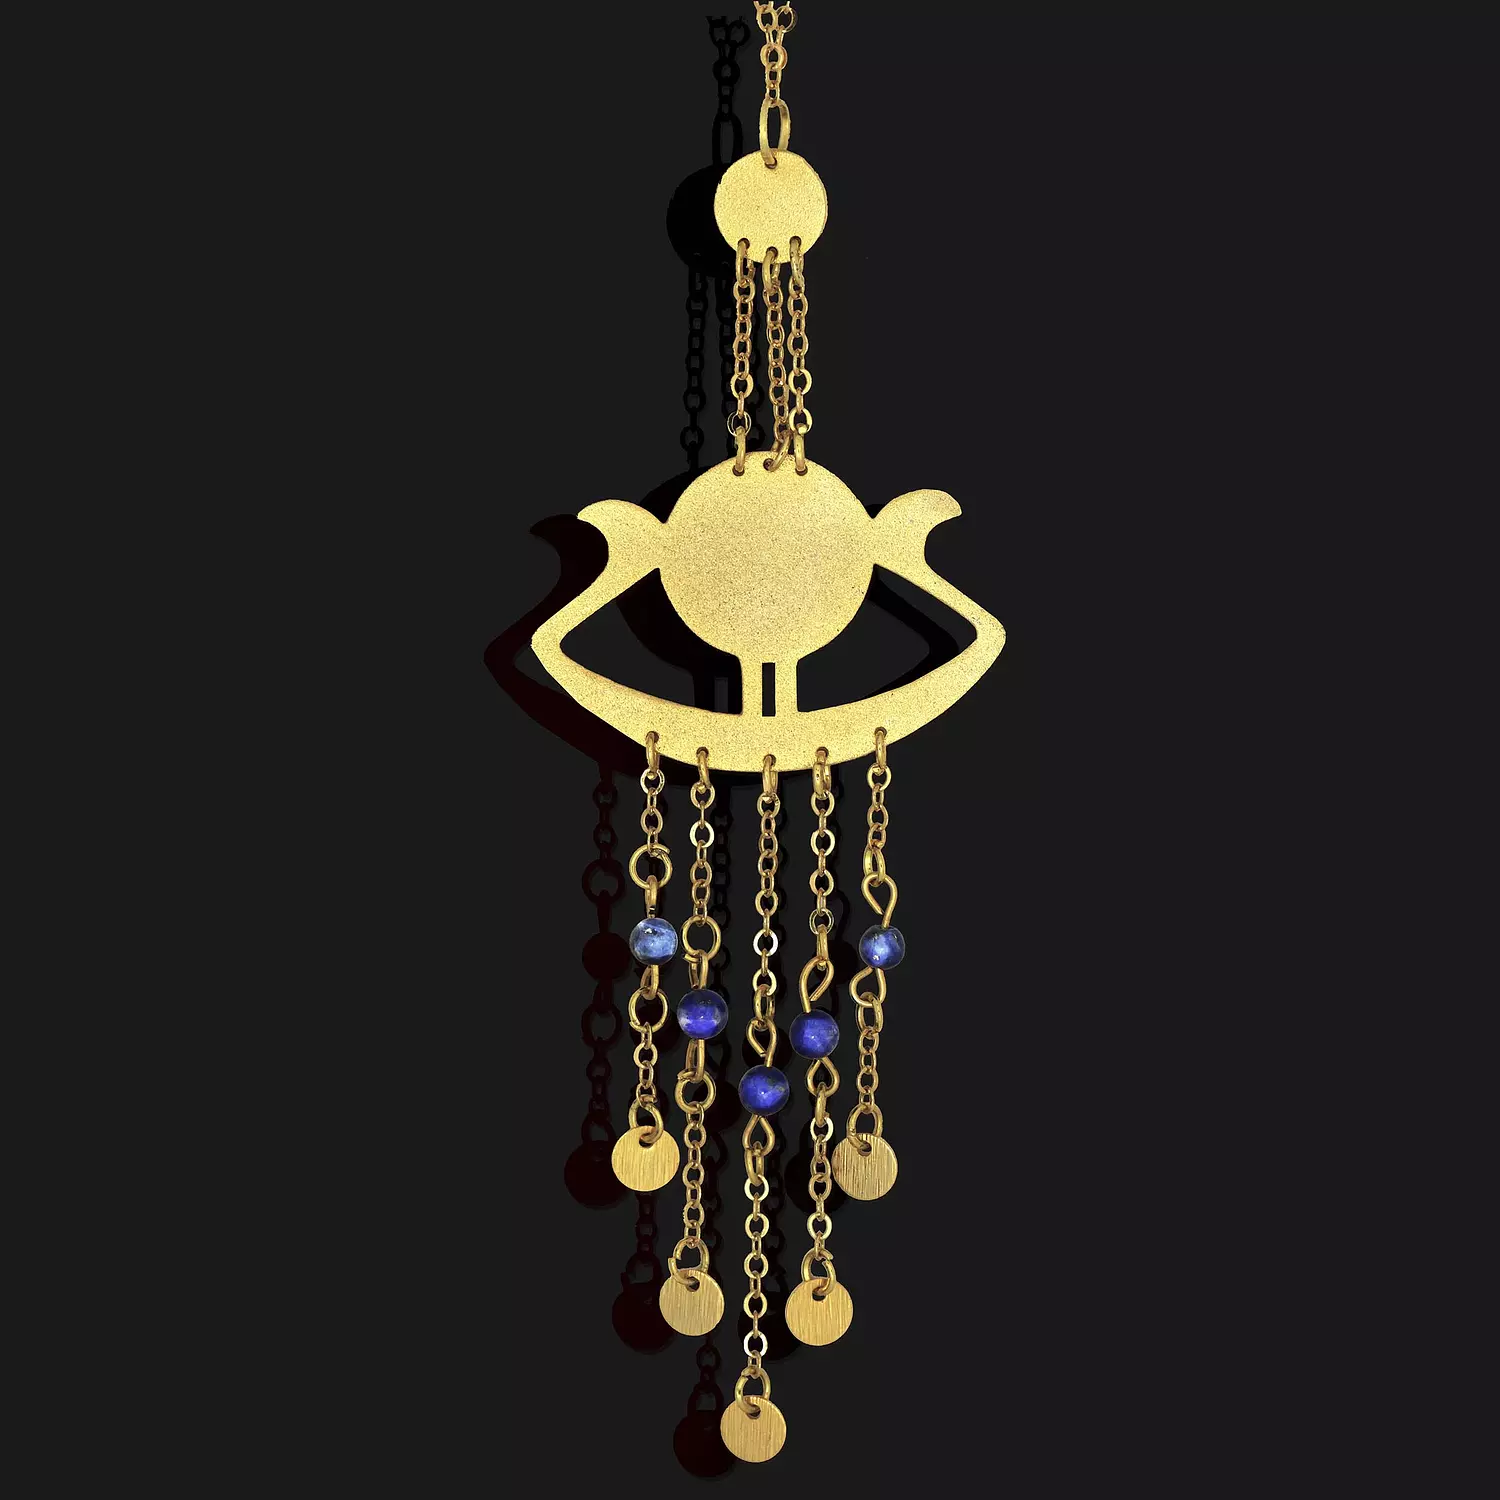 Sunboat necklace hover image